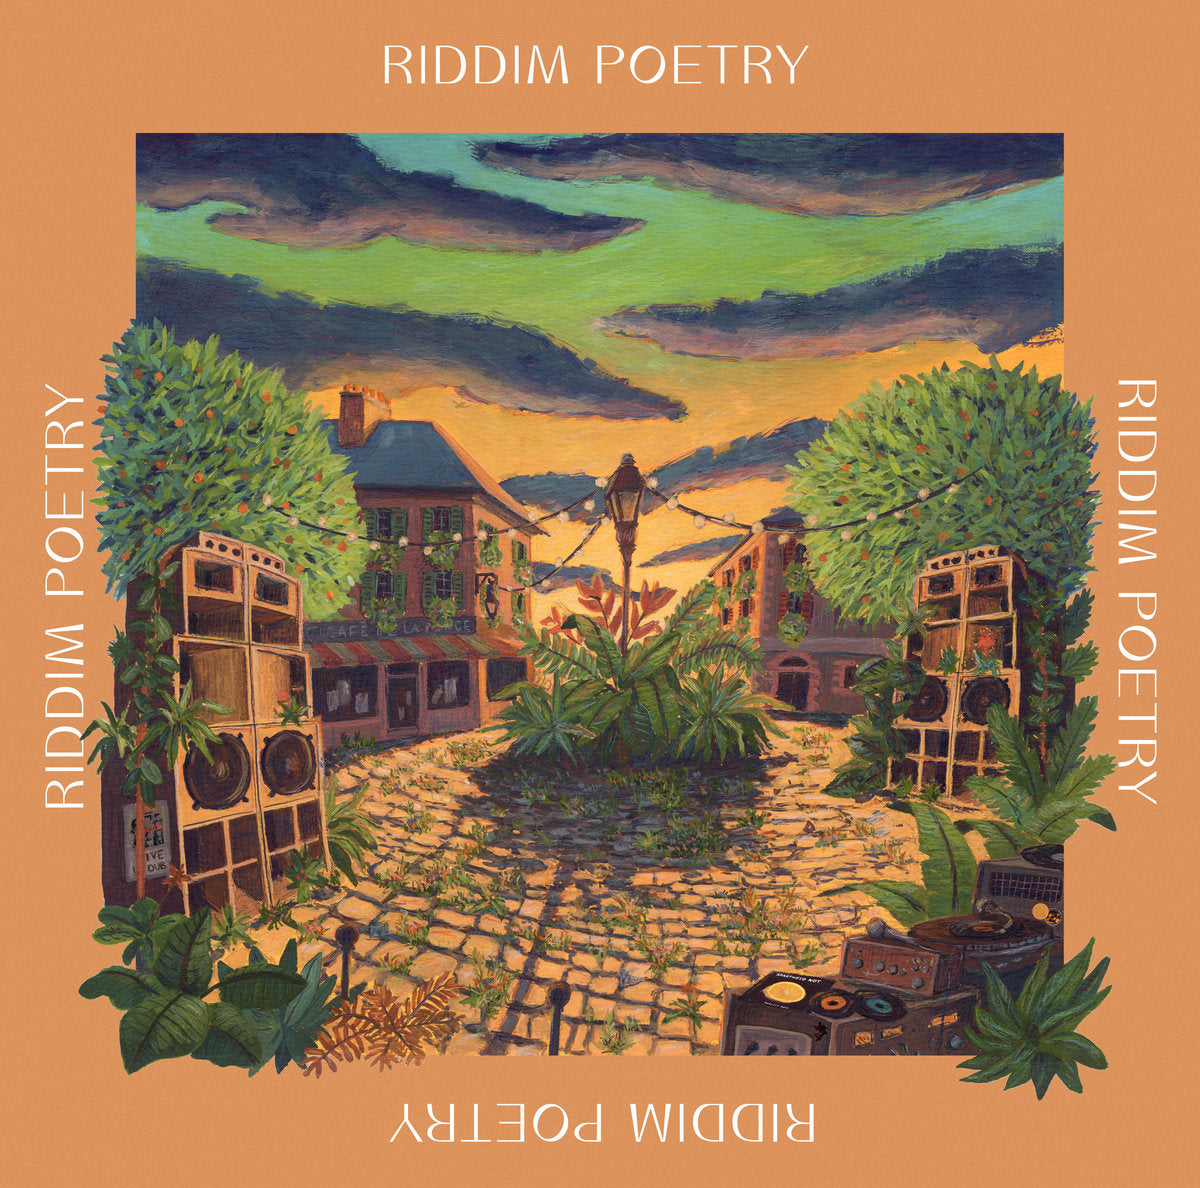 Riddim Poetry (New LP)